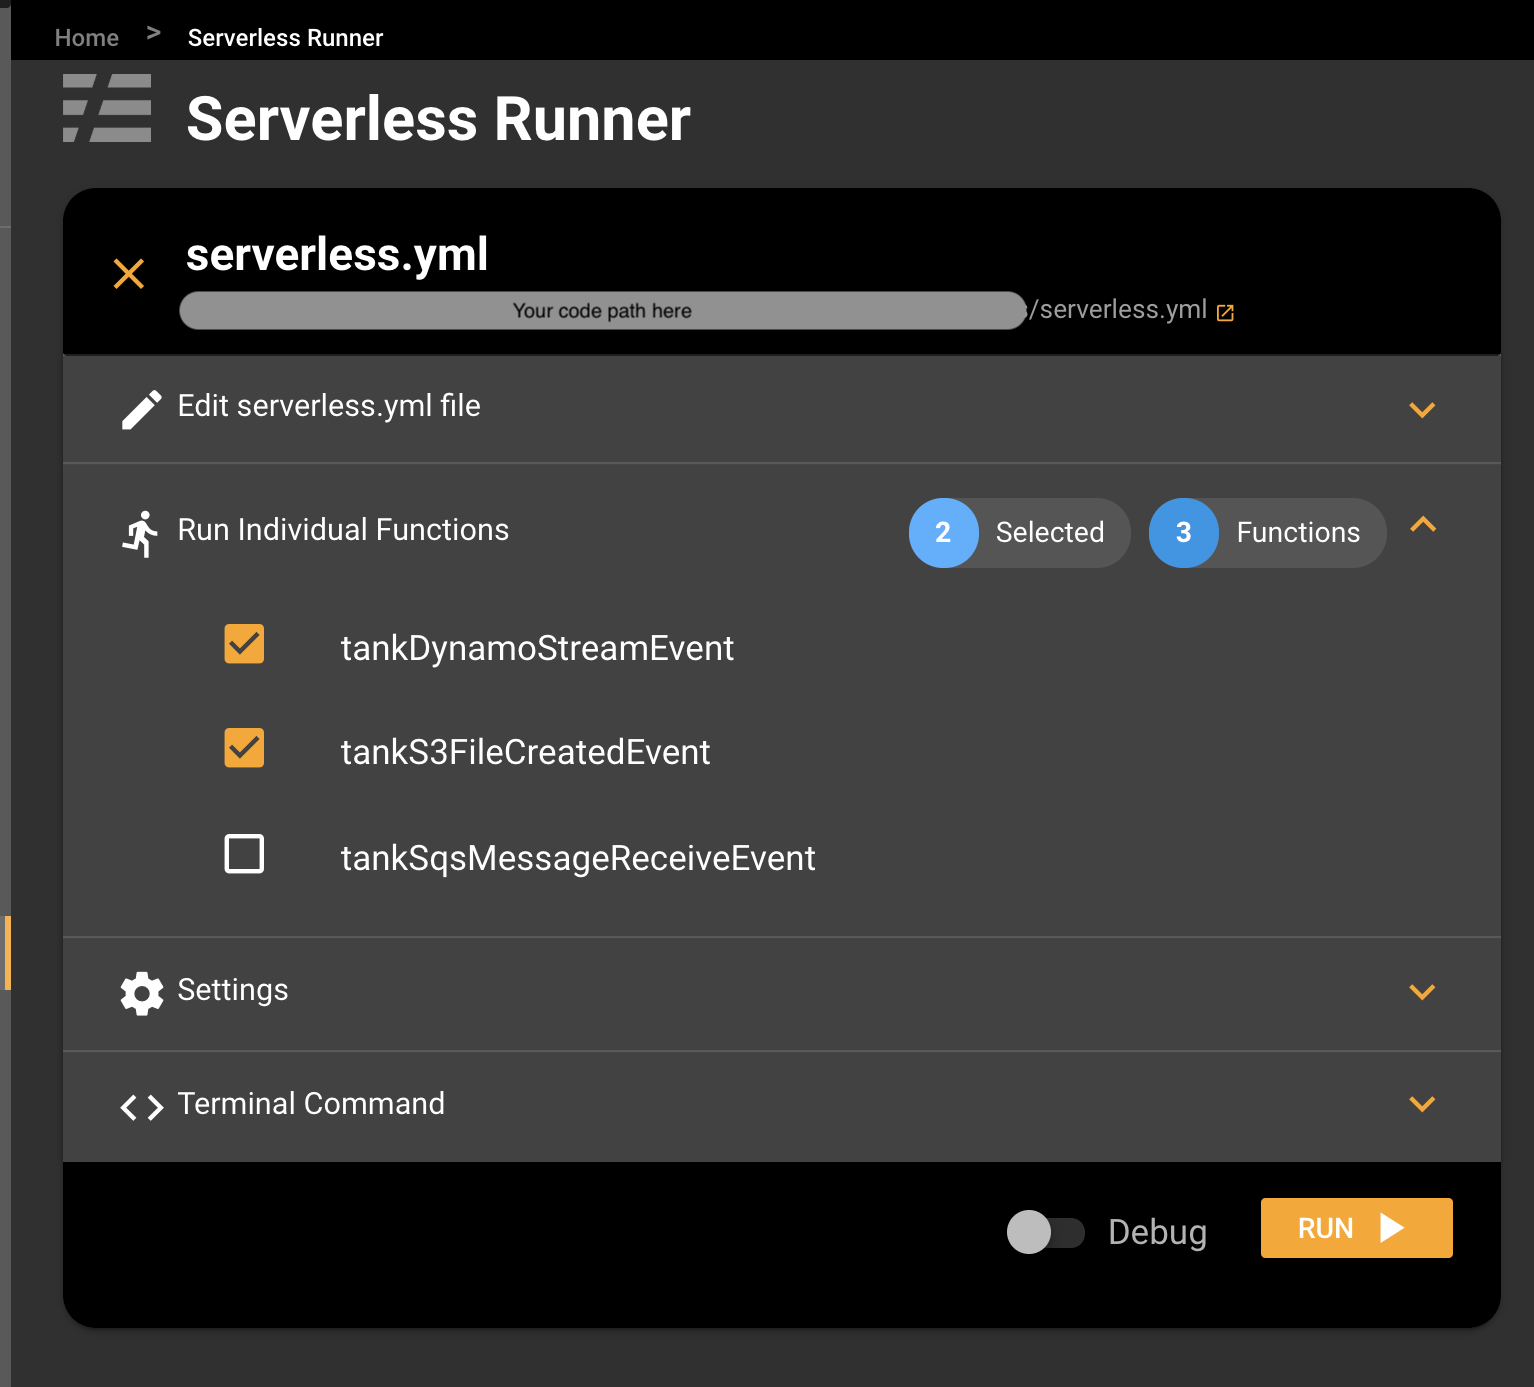 Selecting Serverless functions to run